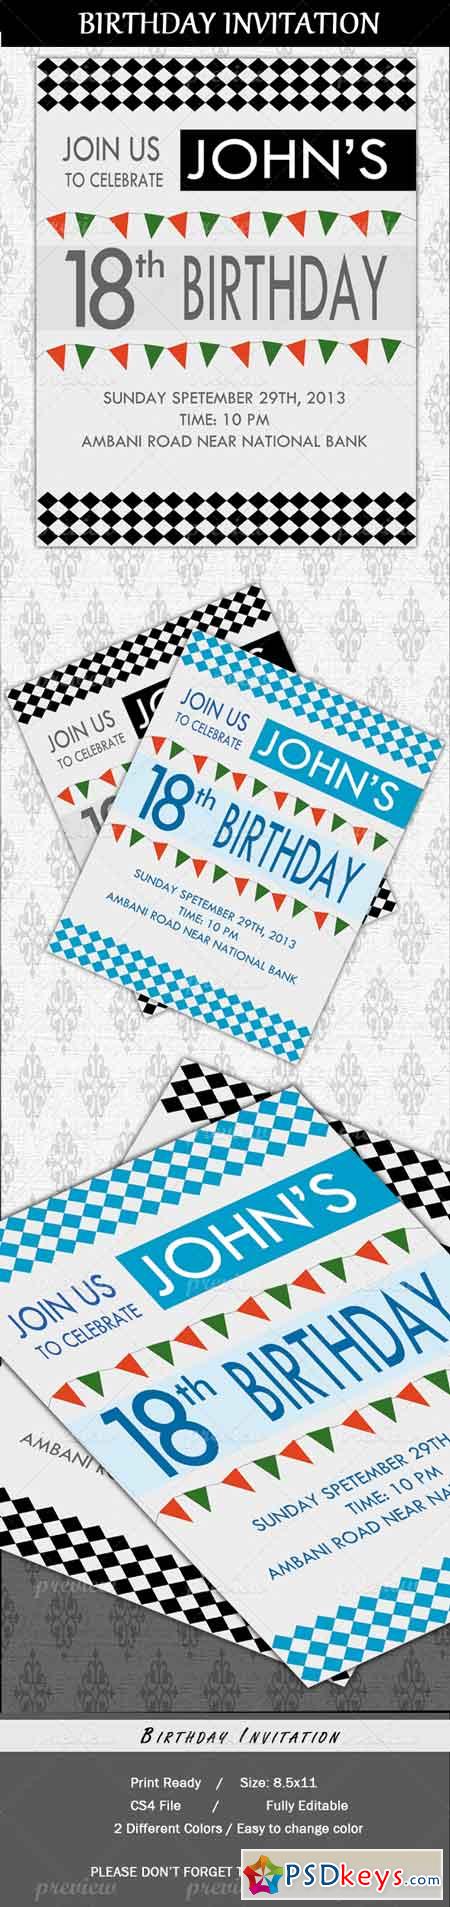 Birthday Party Invitation Cards 2217